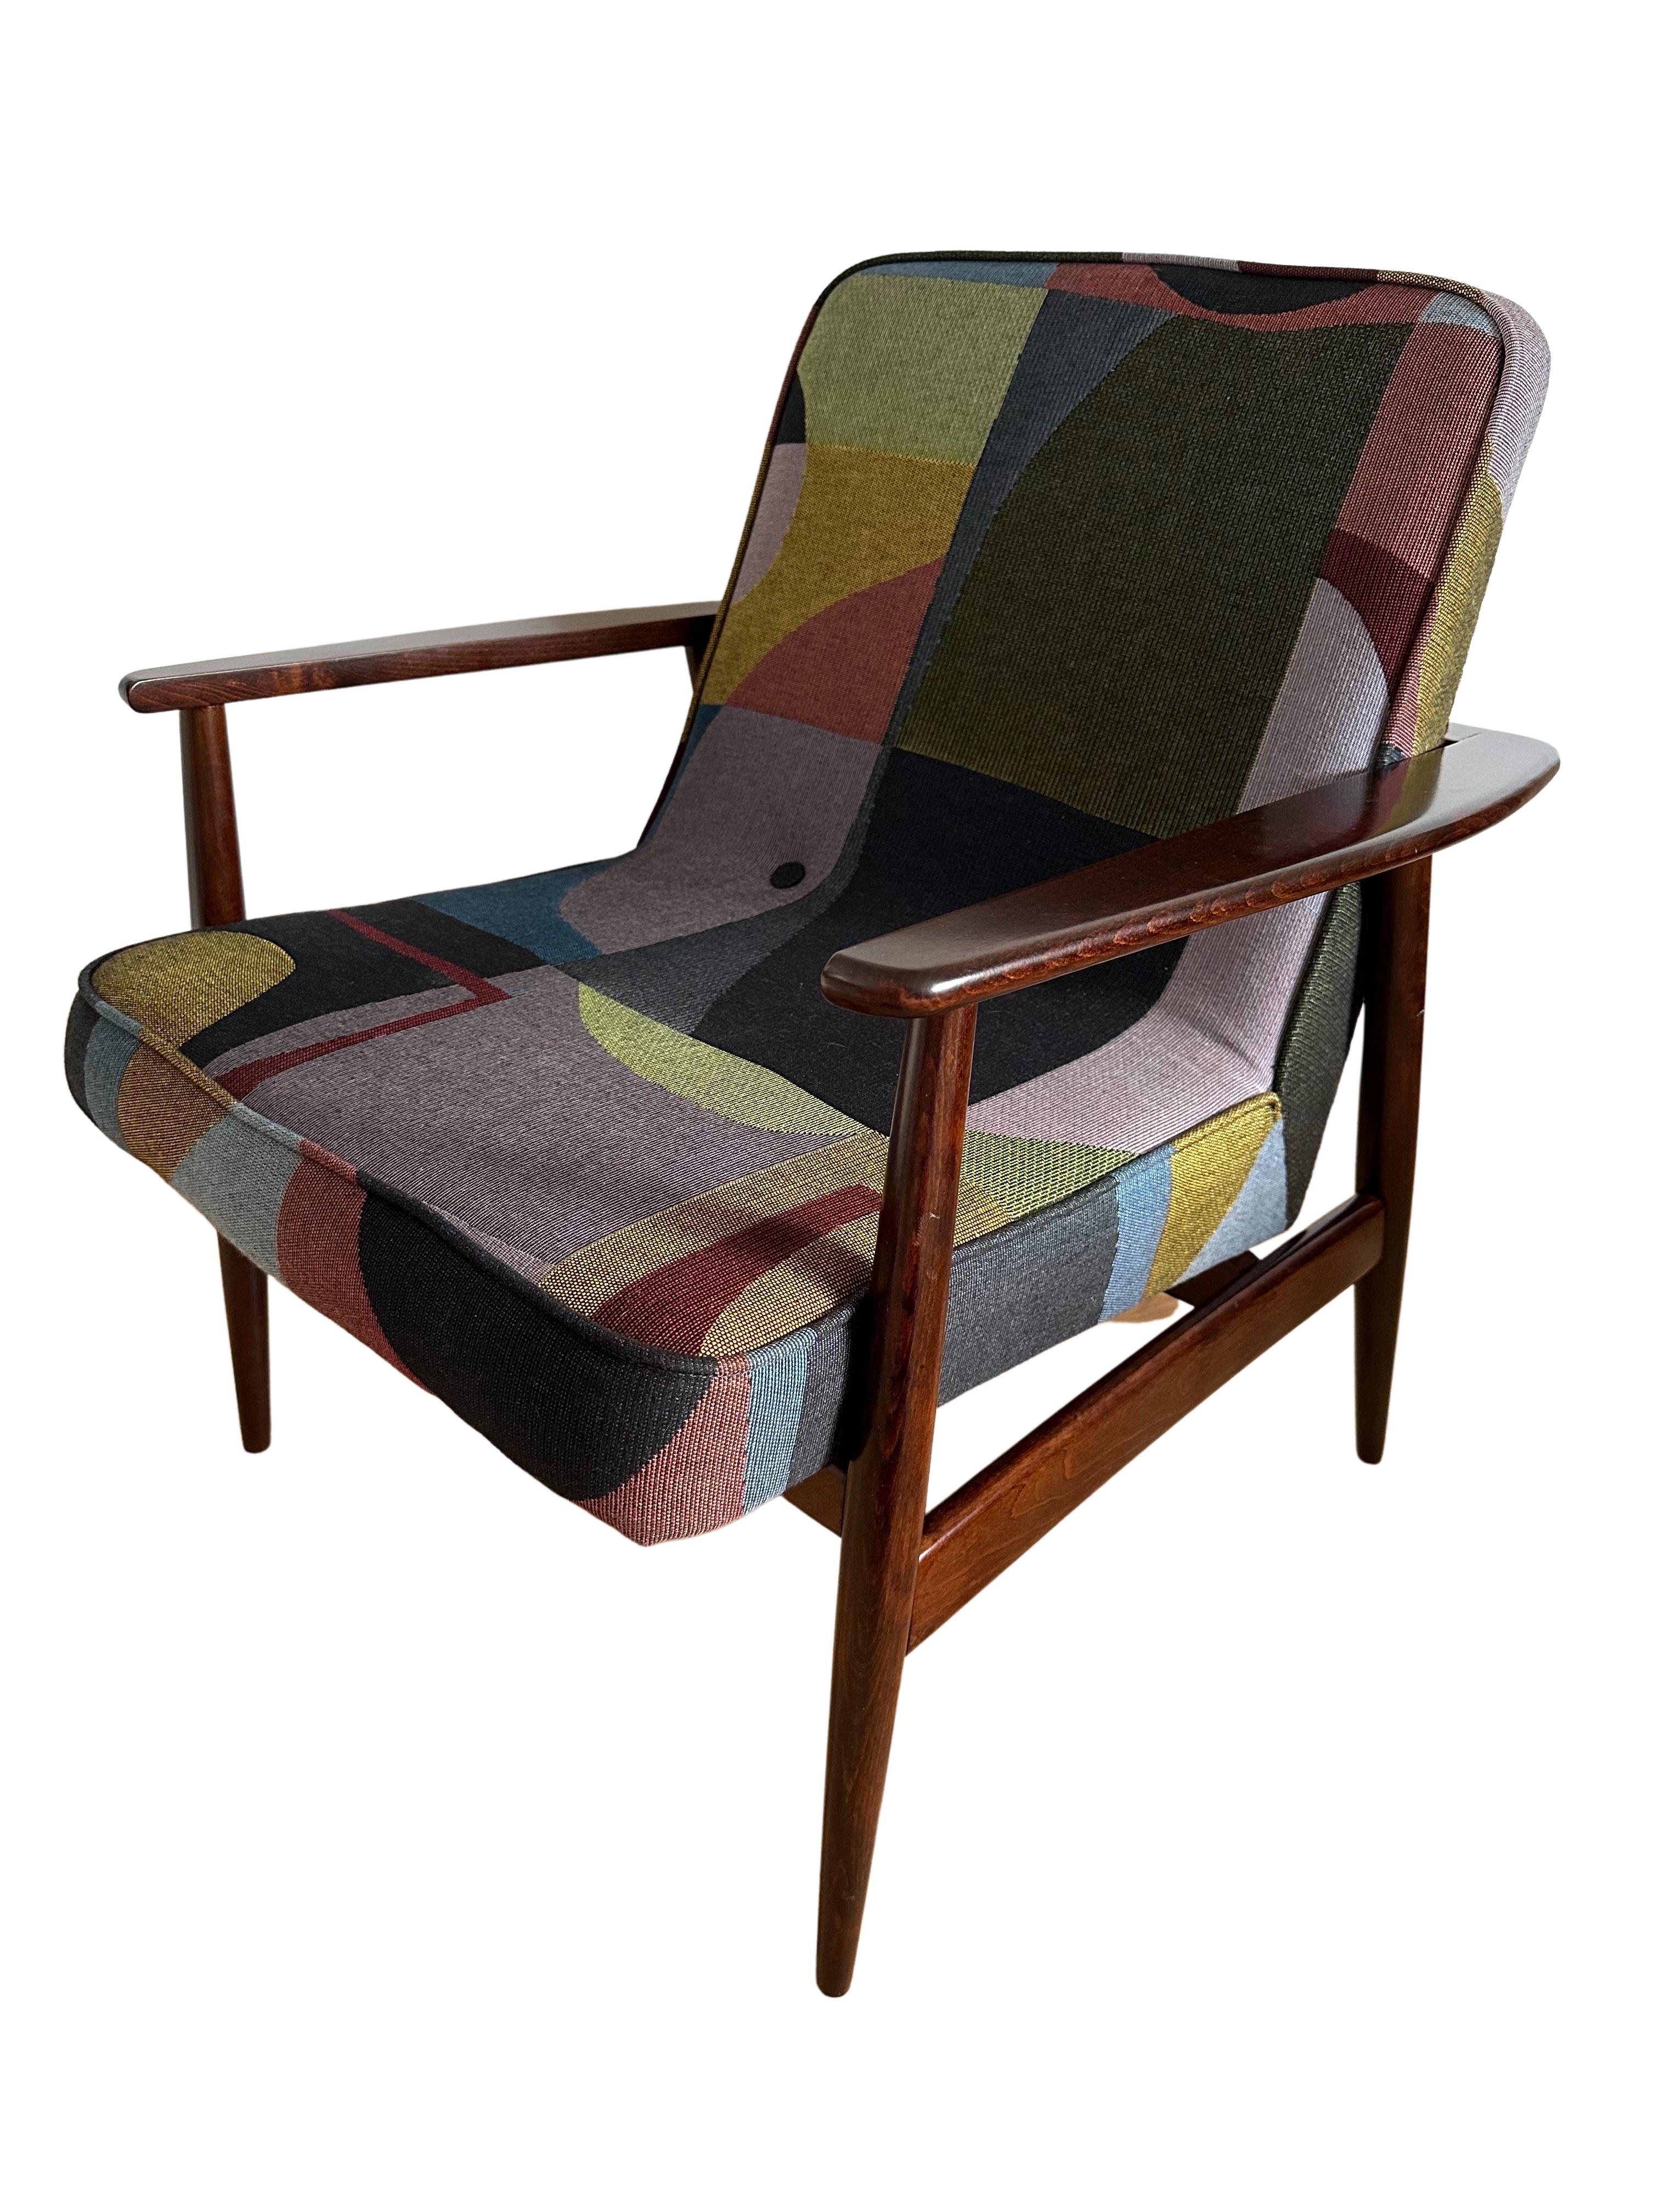 20th Century Midcentury Armchair by Juliszu Kędziorek in Multicolor Jacquard Fabric, 1960s